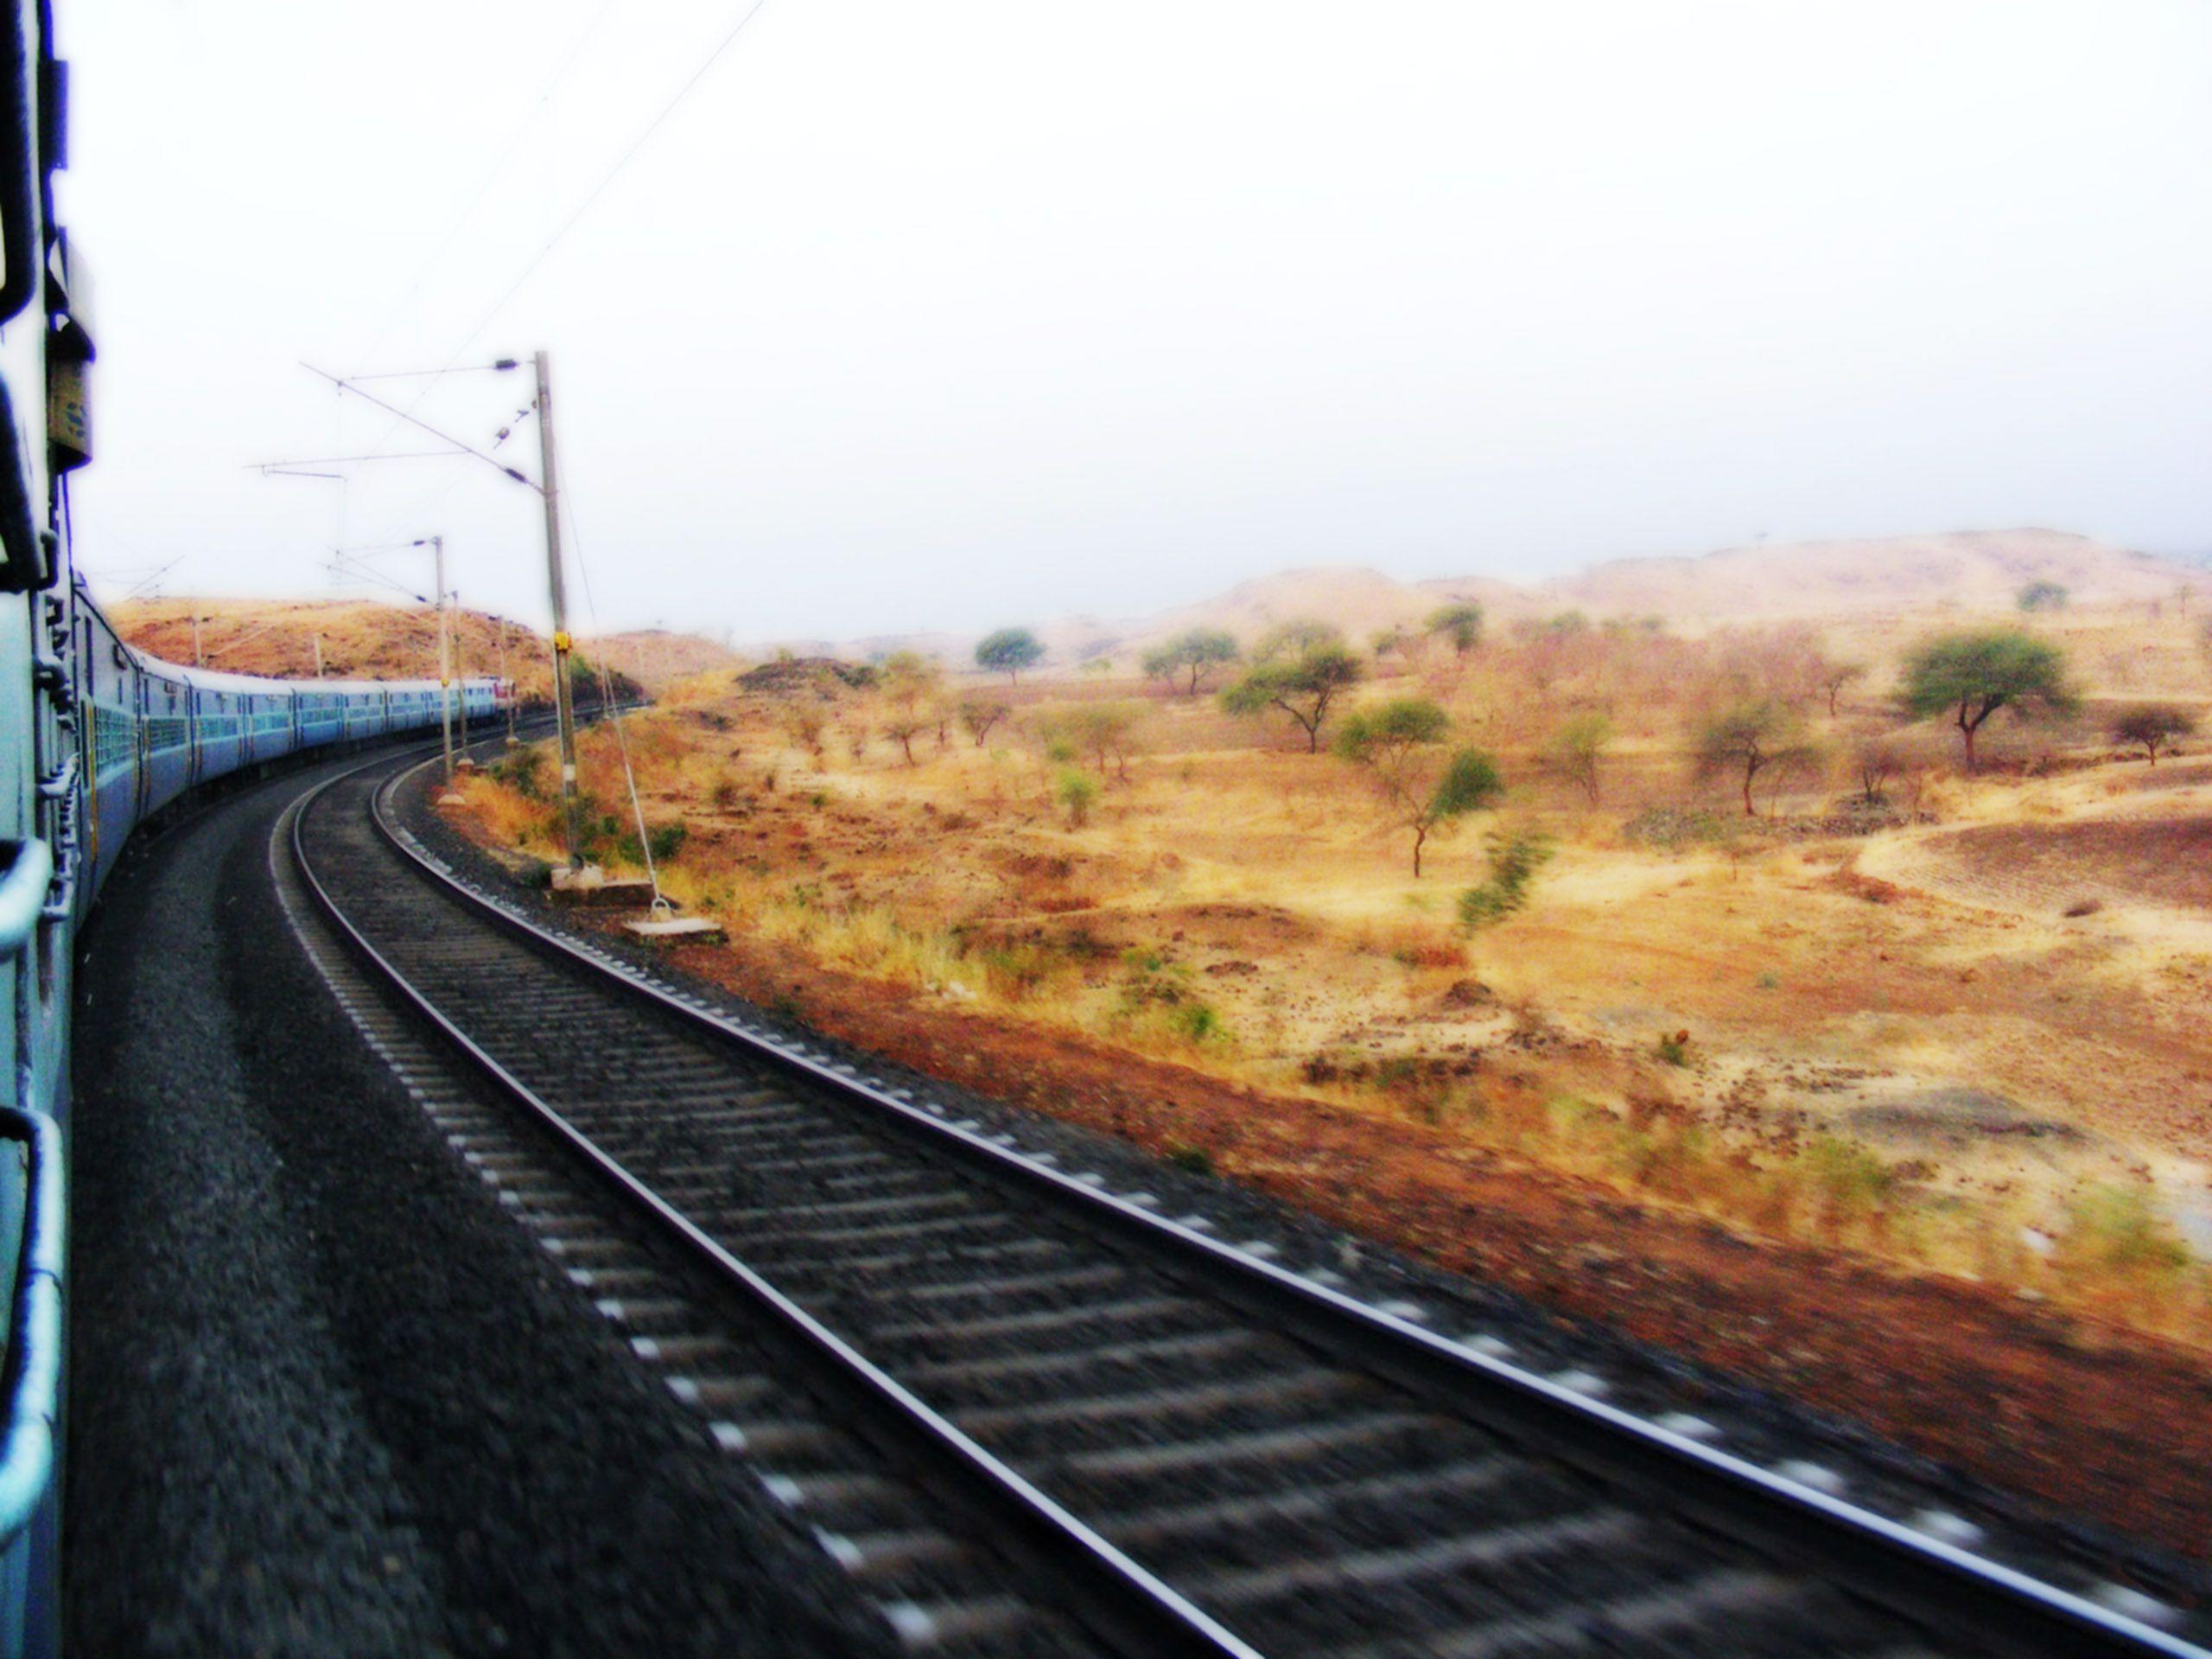 train on rail track during daytime photo – Free Person Image on Unsplash |  Train photography, Indian railways, Indian railway train